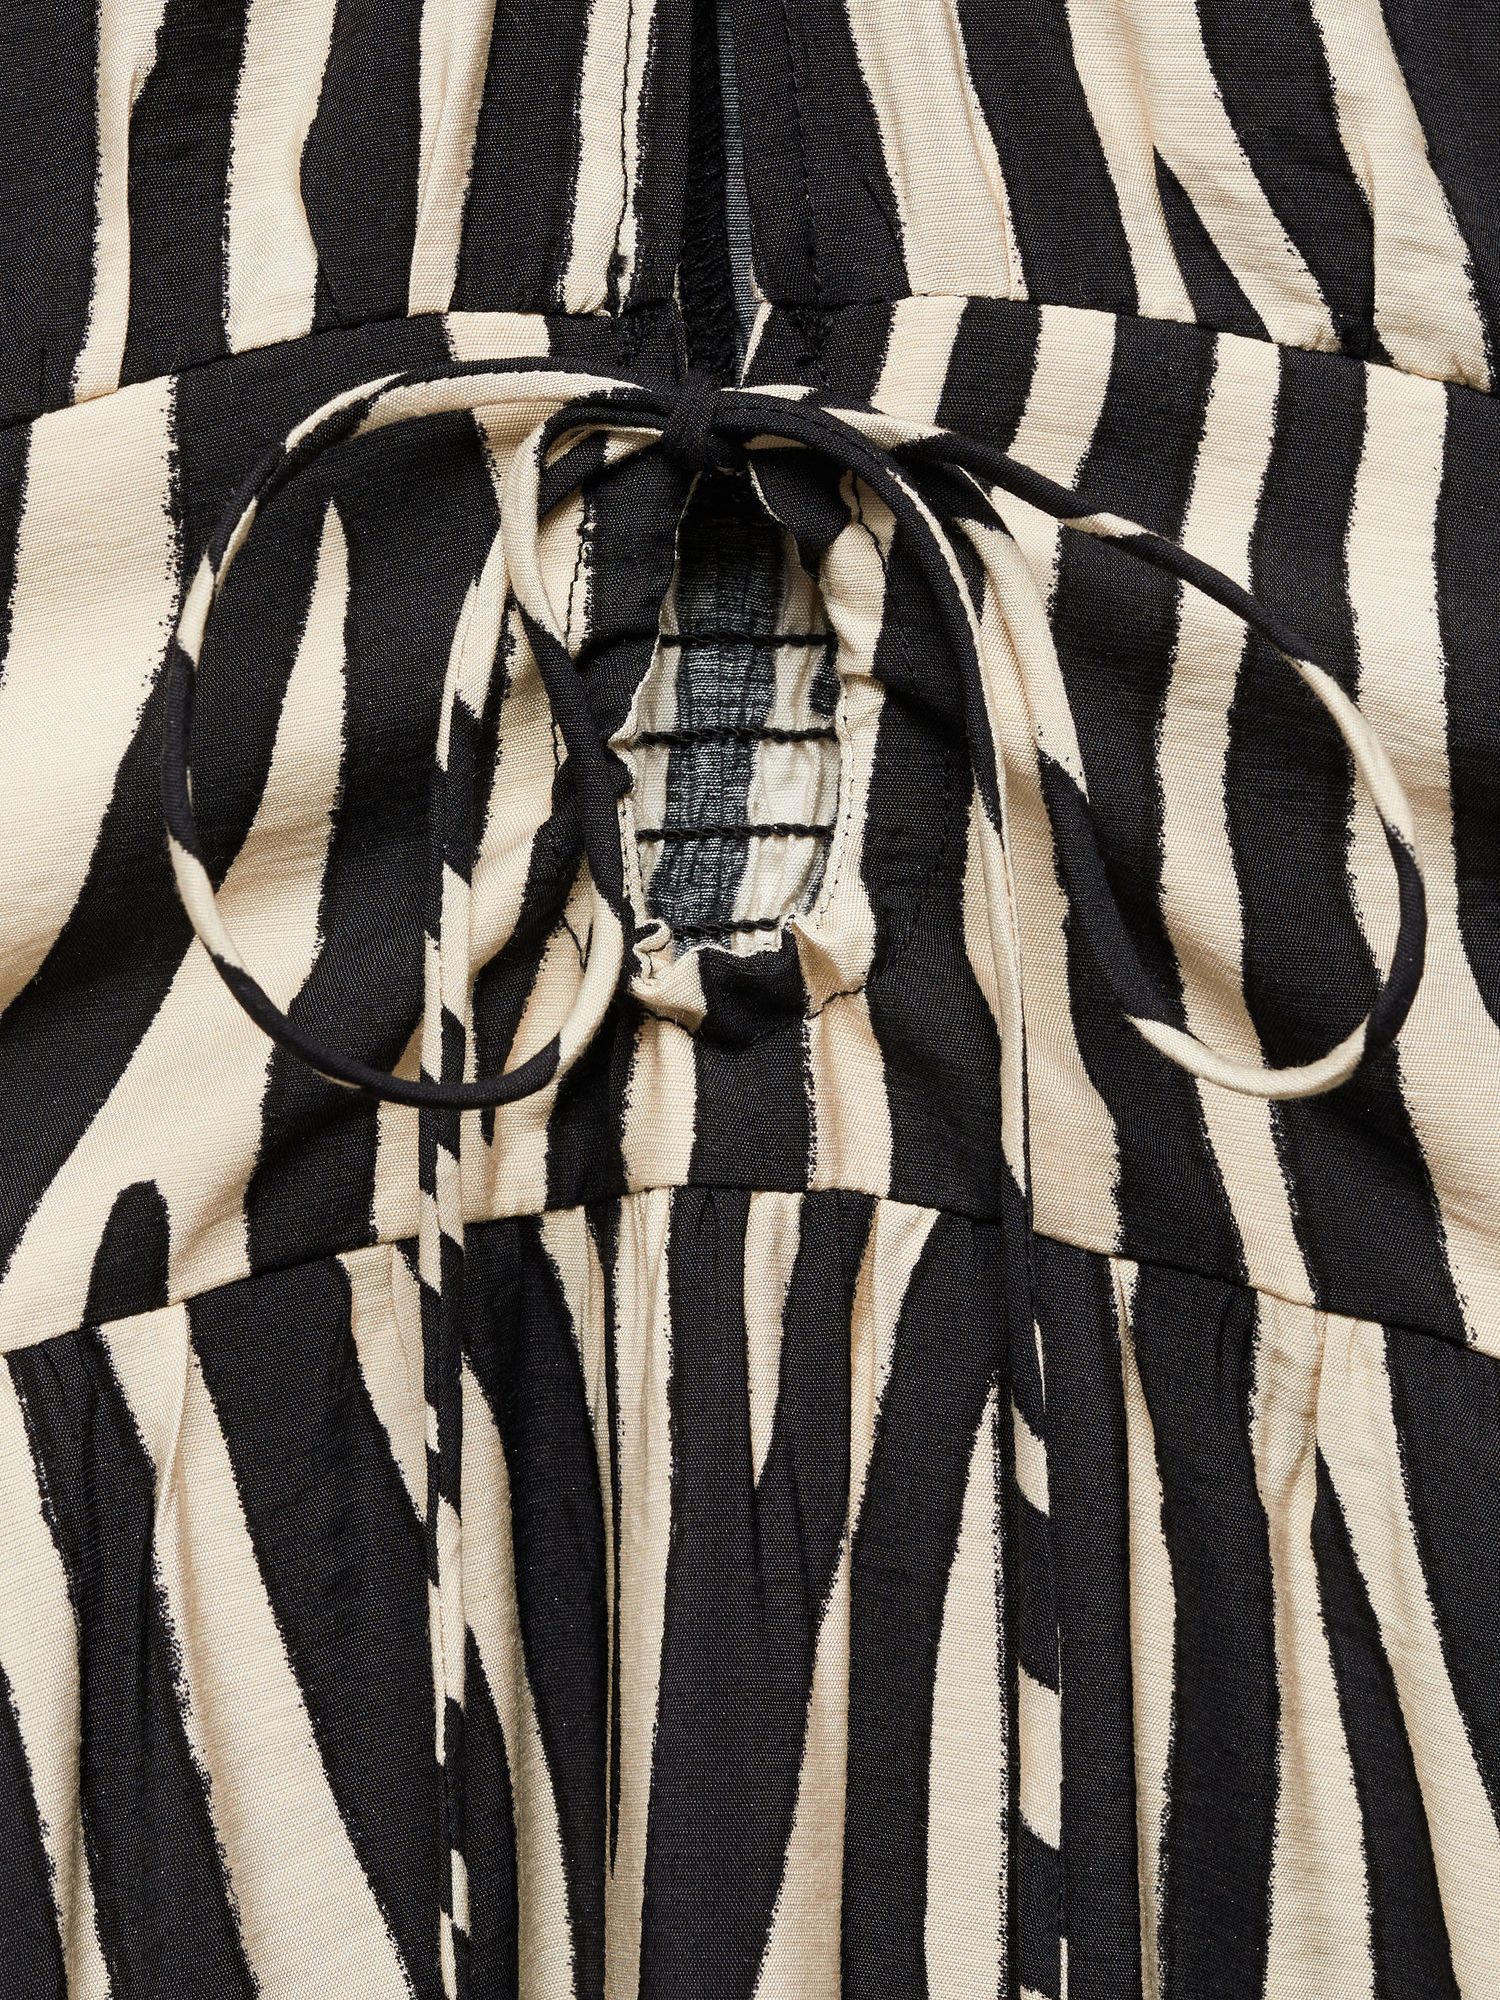 Mango Coloma Zebra Print Tiered Maxi Dress, Black/Cream, 10